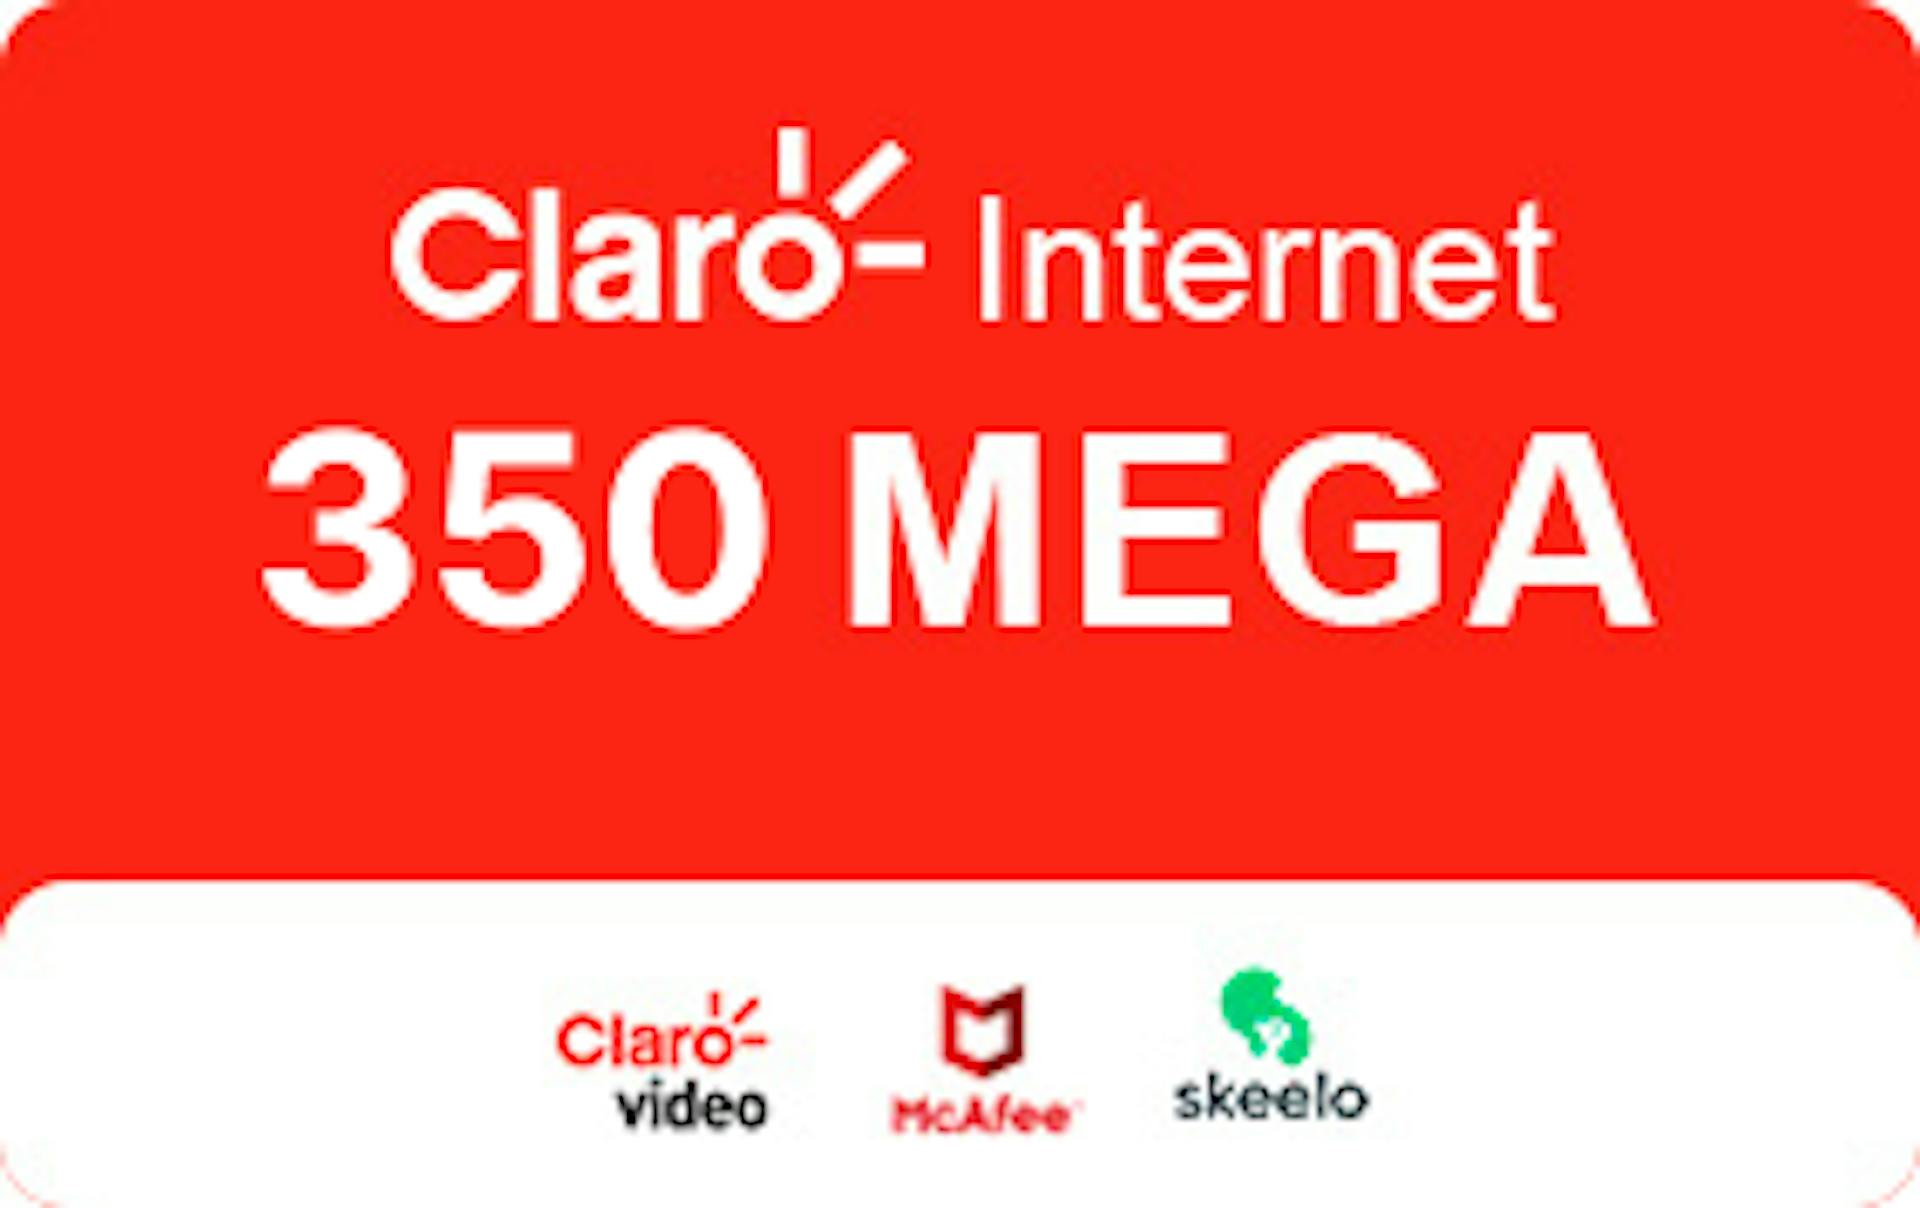 claro internet 350 mega